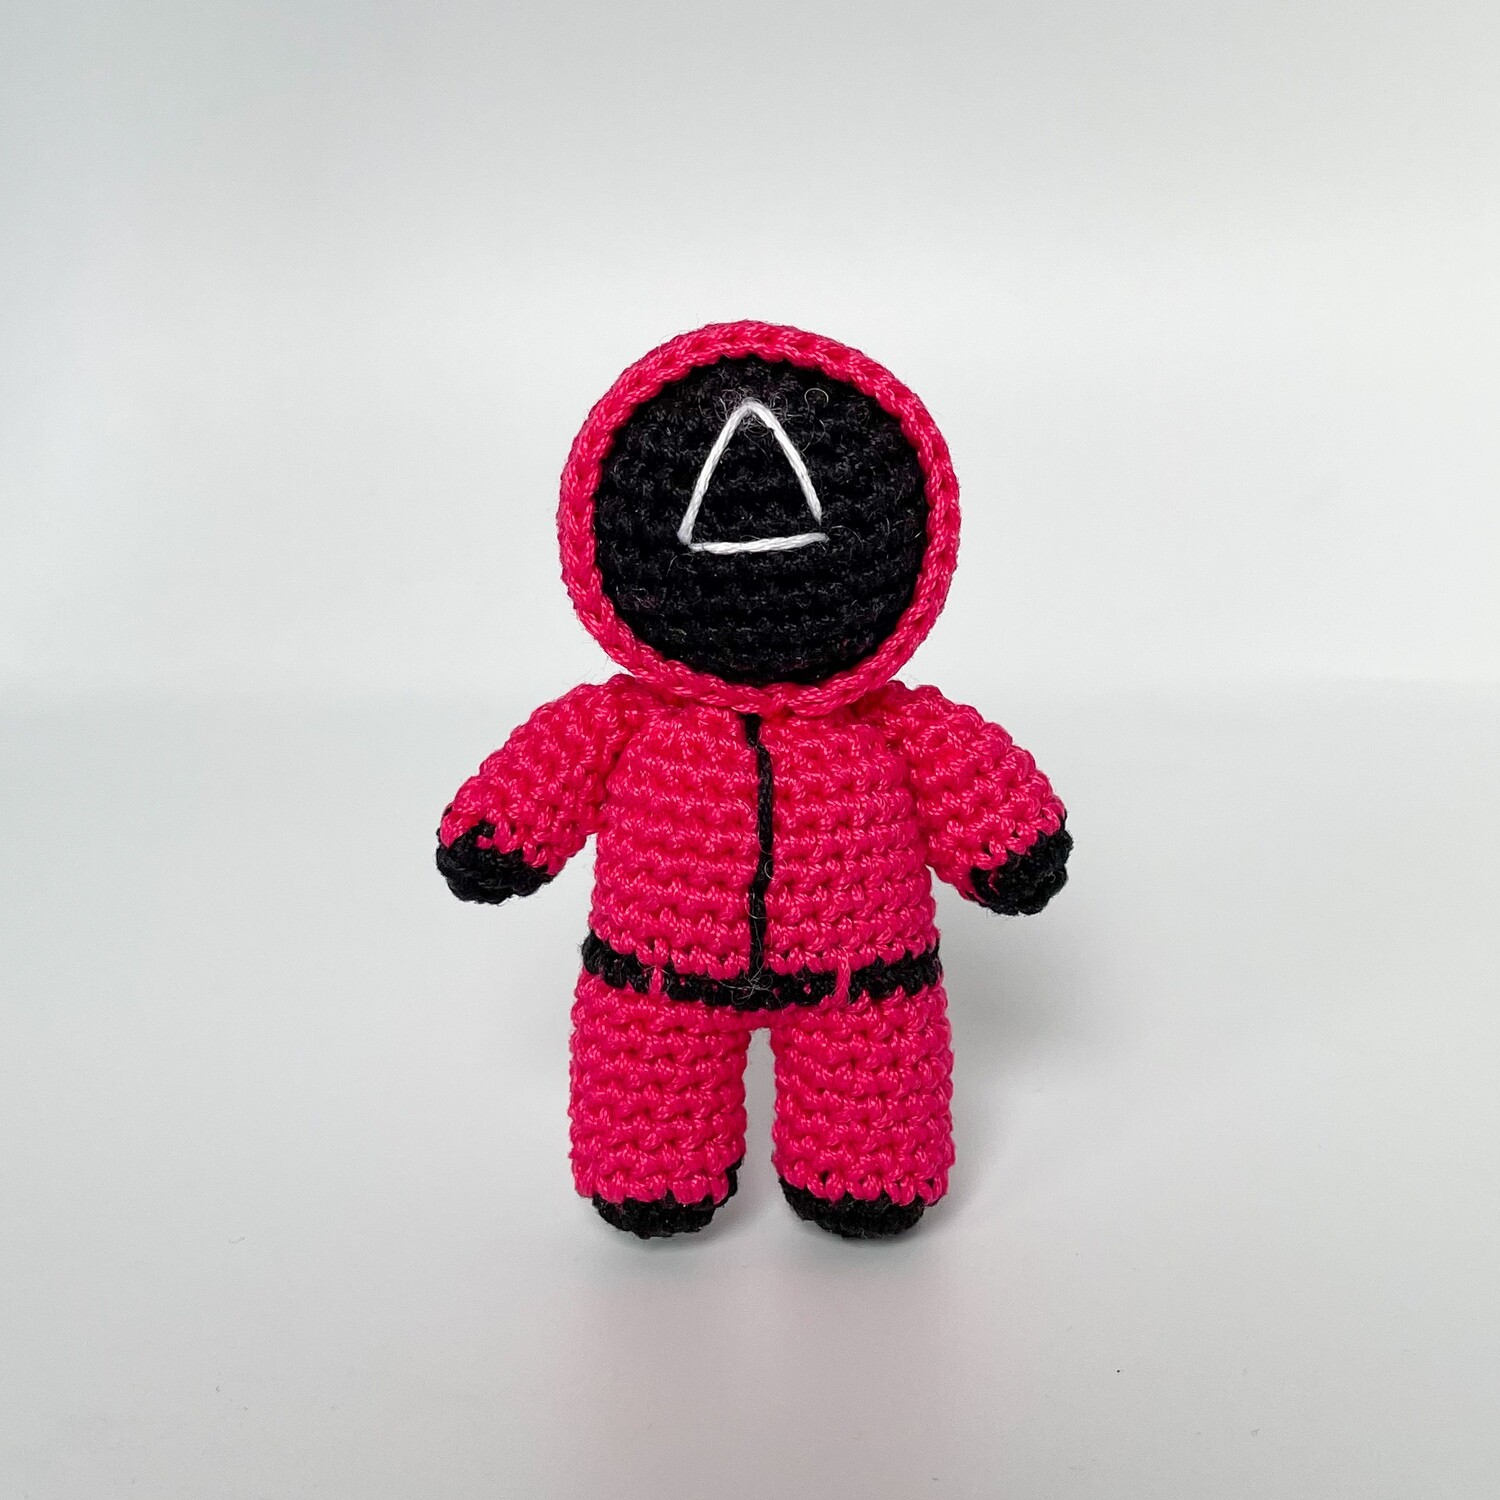 Crochet pink soldier doll pattern, crochet keychain amigurumi pattern, DIY roomate gift idea